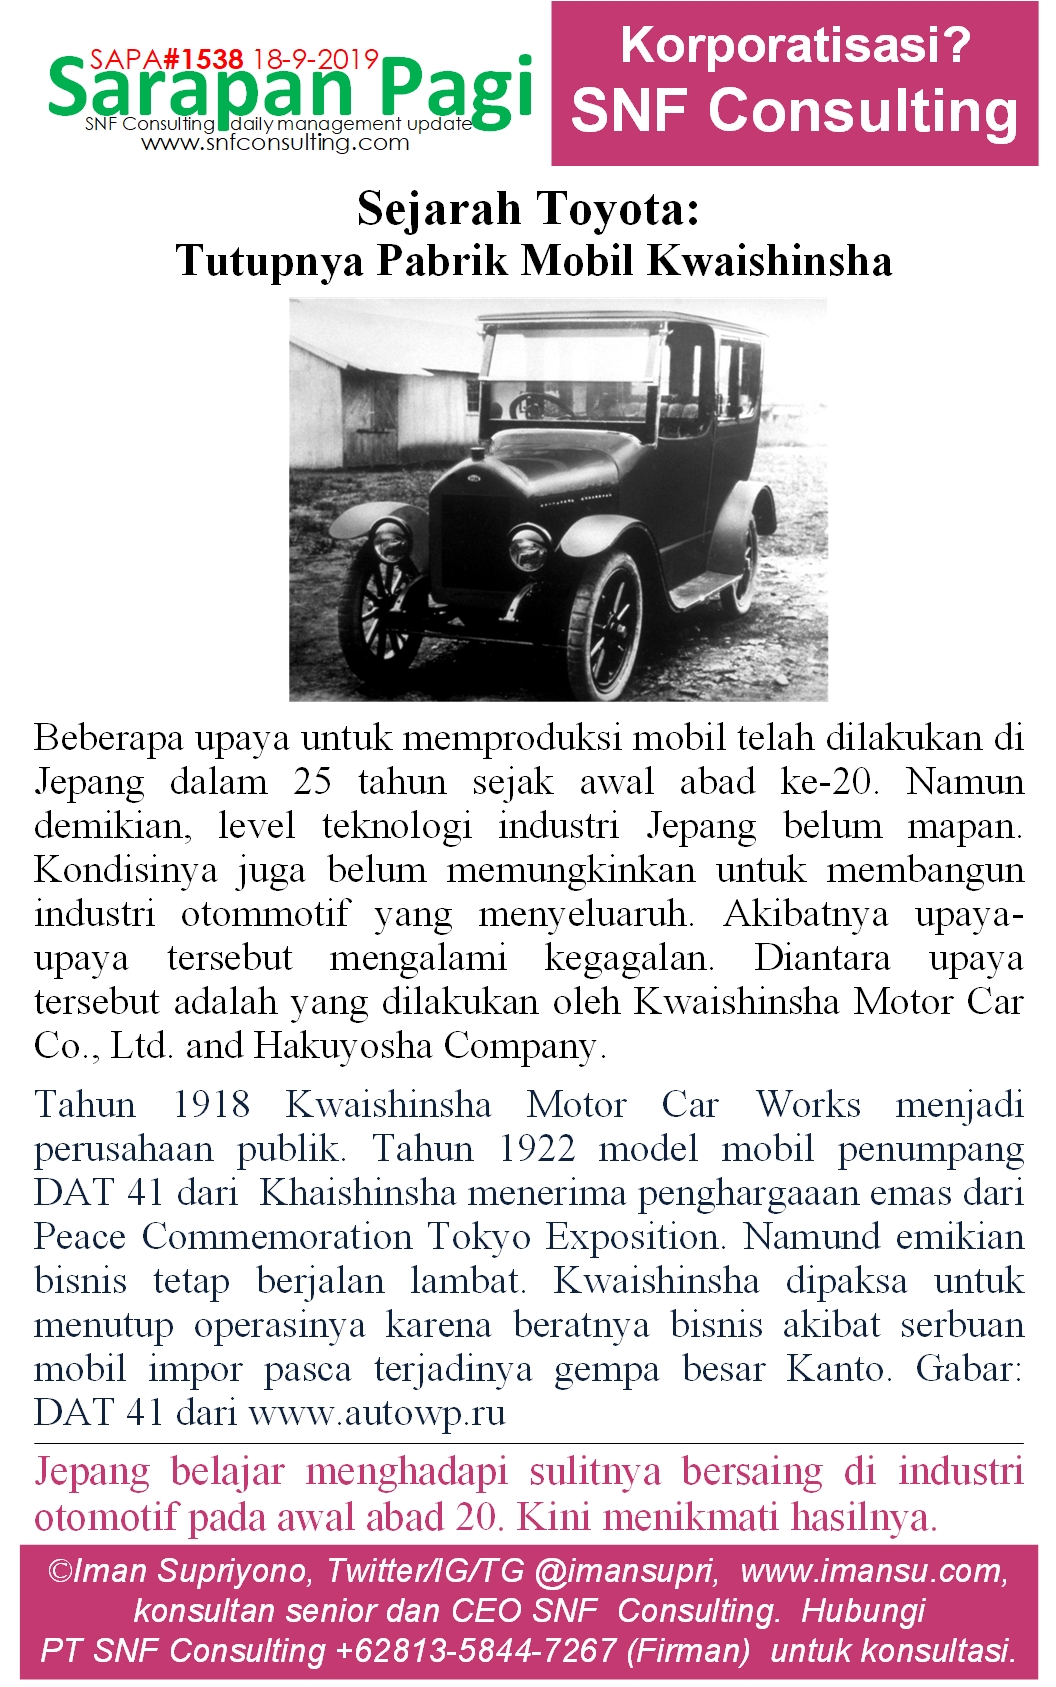 SAPA1538 Sejarah Toyota Kwaishinsha &amp; Hakuyosha